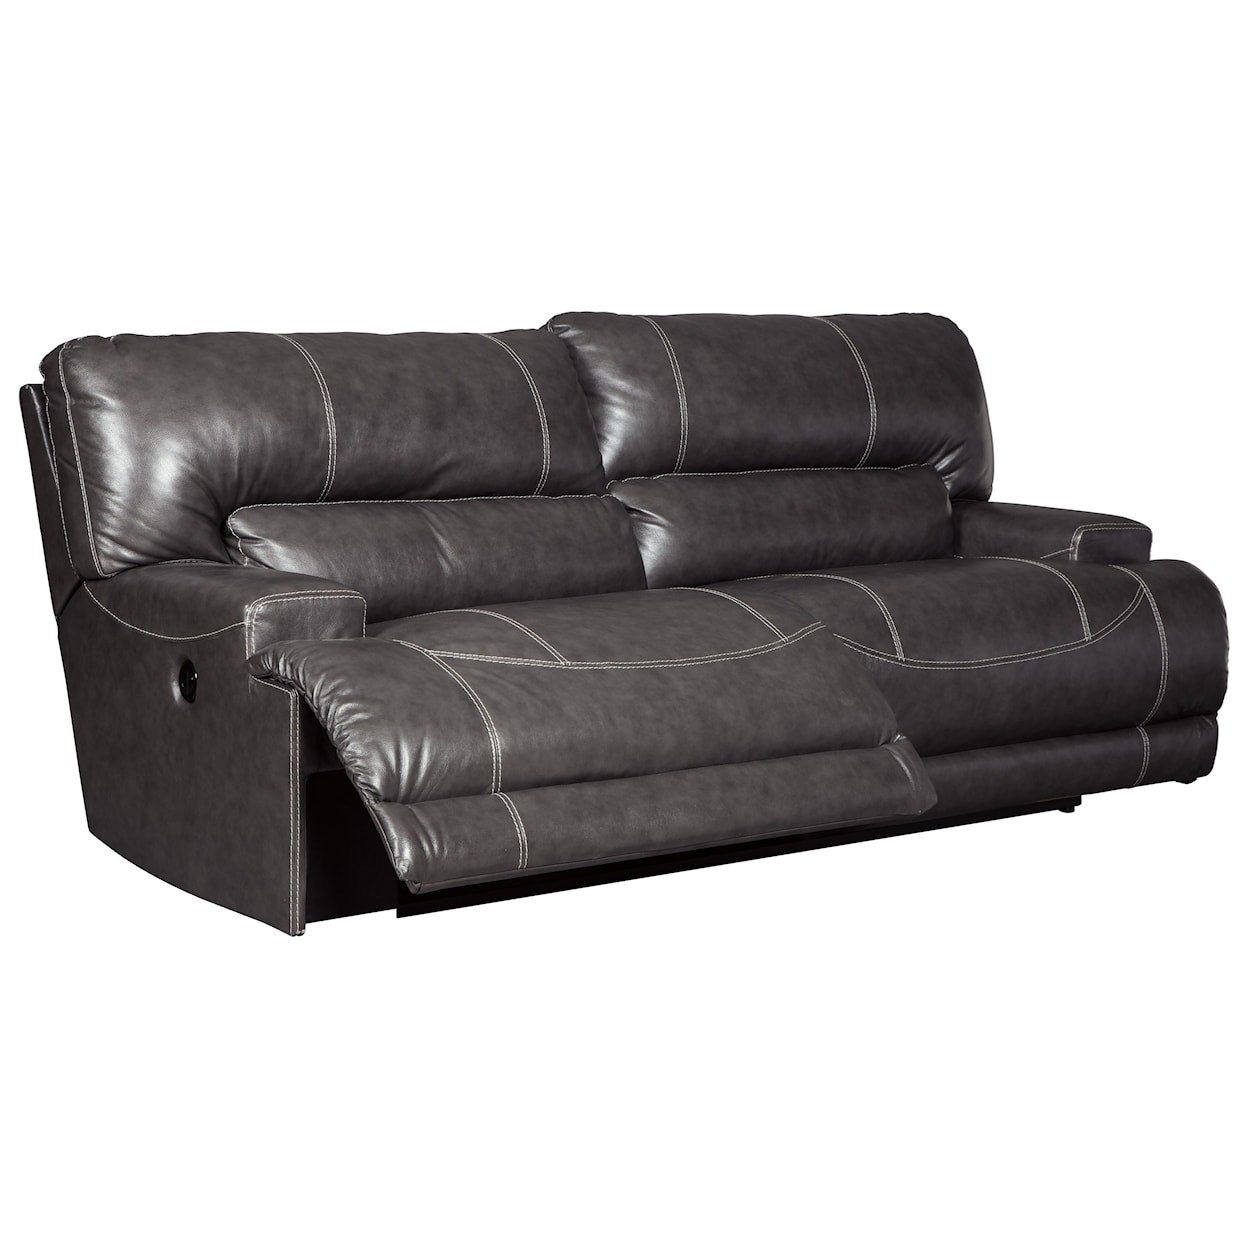 Benchcraft McCaskill 2-Seat Reclining Sofa